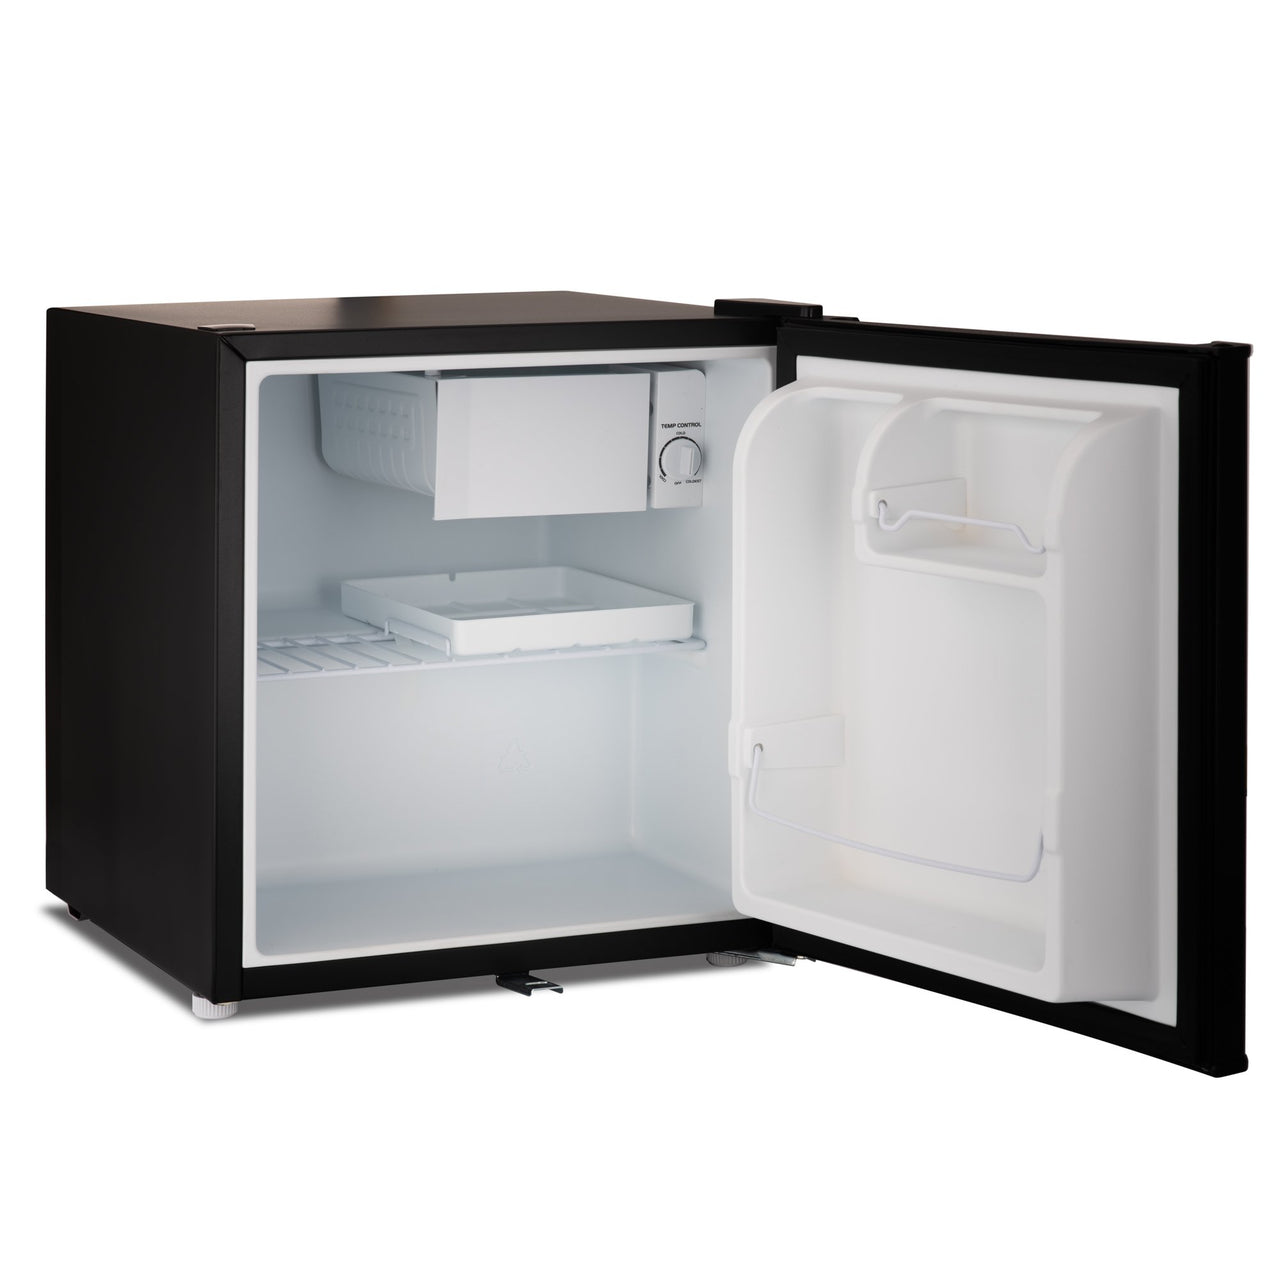 Subcold Eco 50 litre table top fridge black interior with freezer